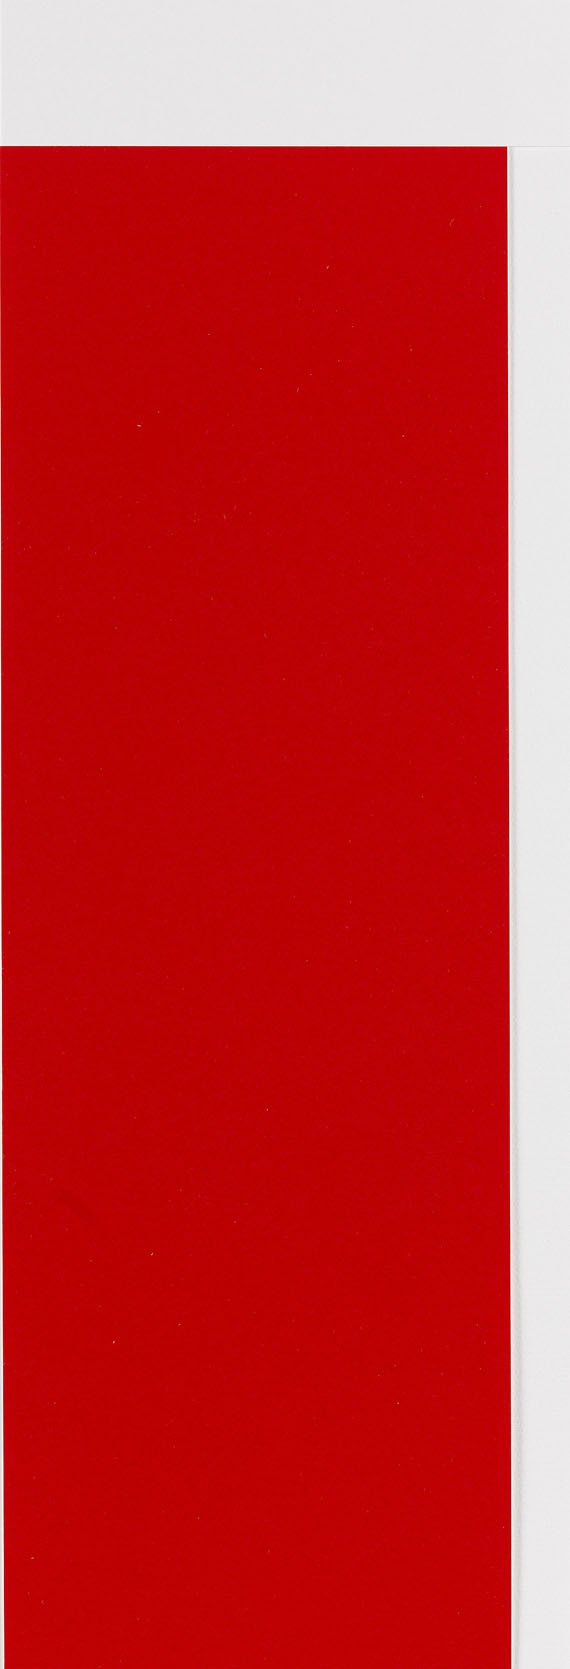 Imi Knoebel - Rot-Weiss III - Weitere Abbildung